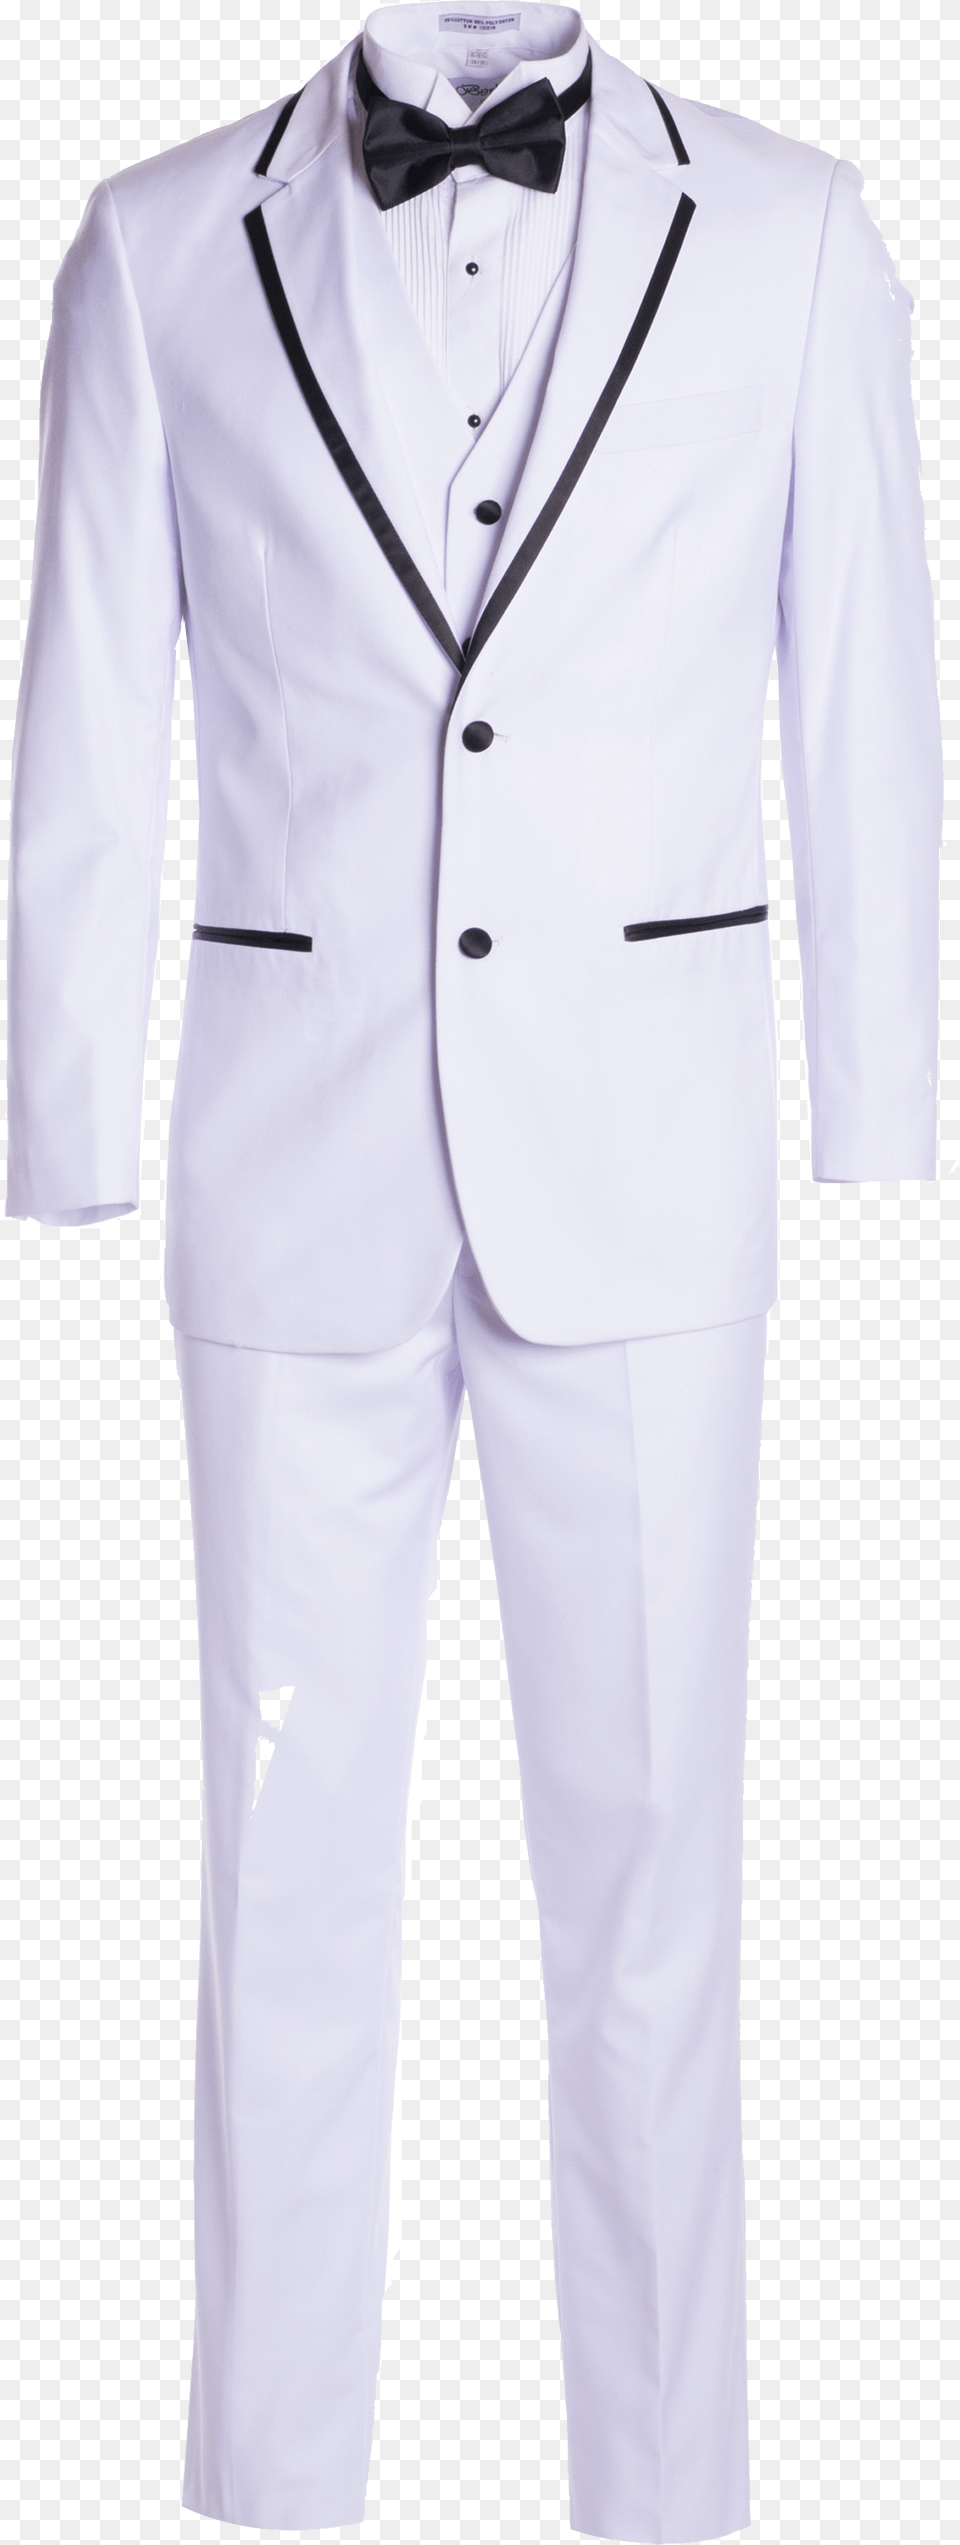 White Tuxedo Image File Tuxedo, Clothing, Formal Wear, Suit, Shirt Free Png Download